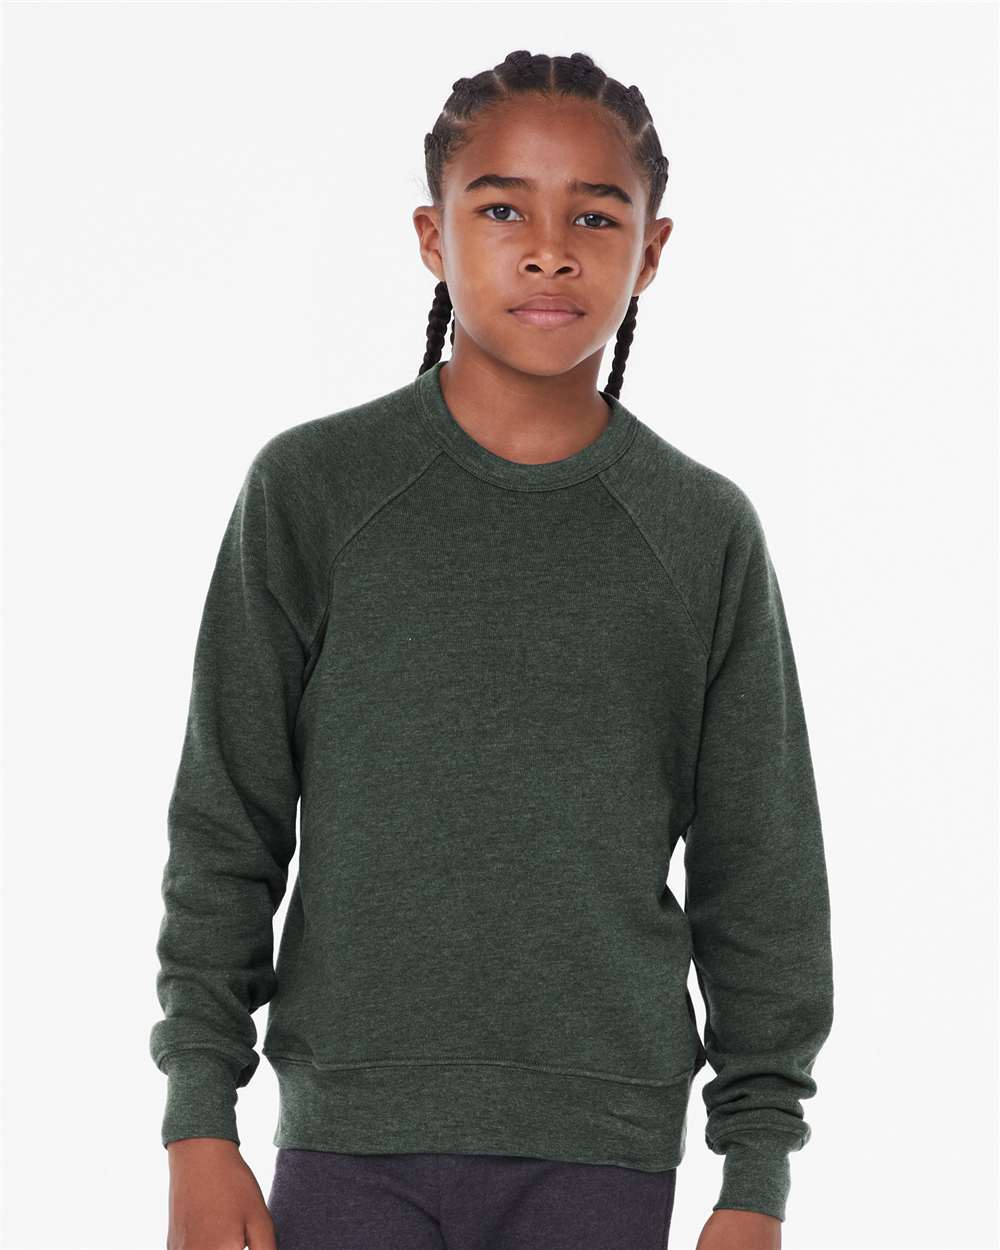 Custom Embroidered Youth Raglan Sweatshirts - Nottingham Embroidery